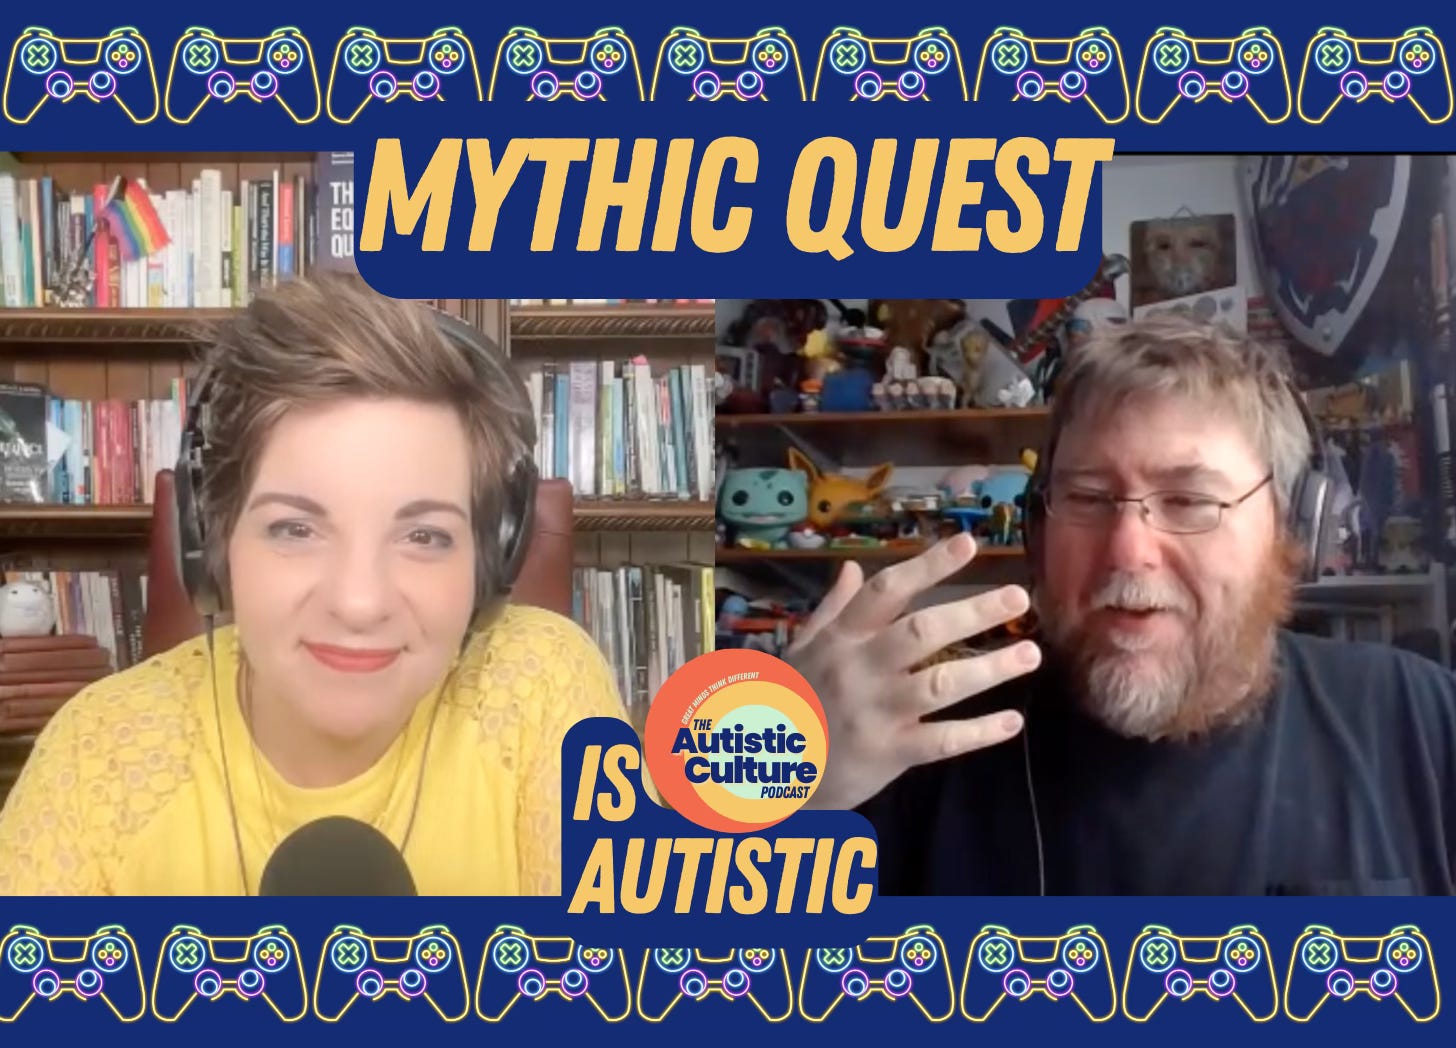 Mythic Quest is Autistic (Episode 60)